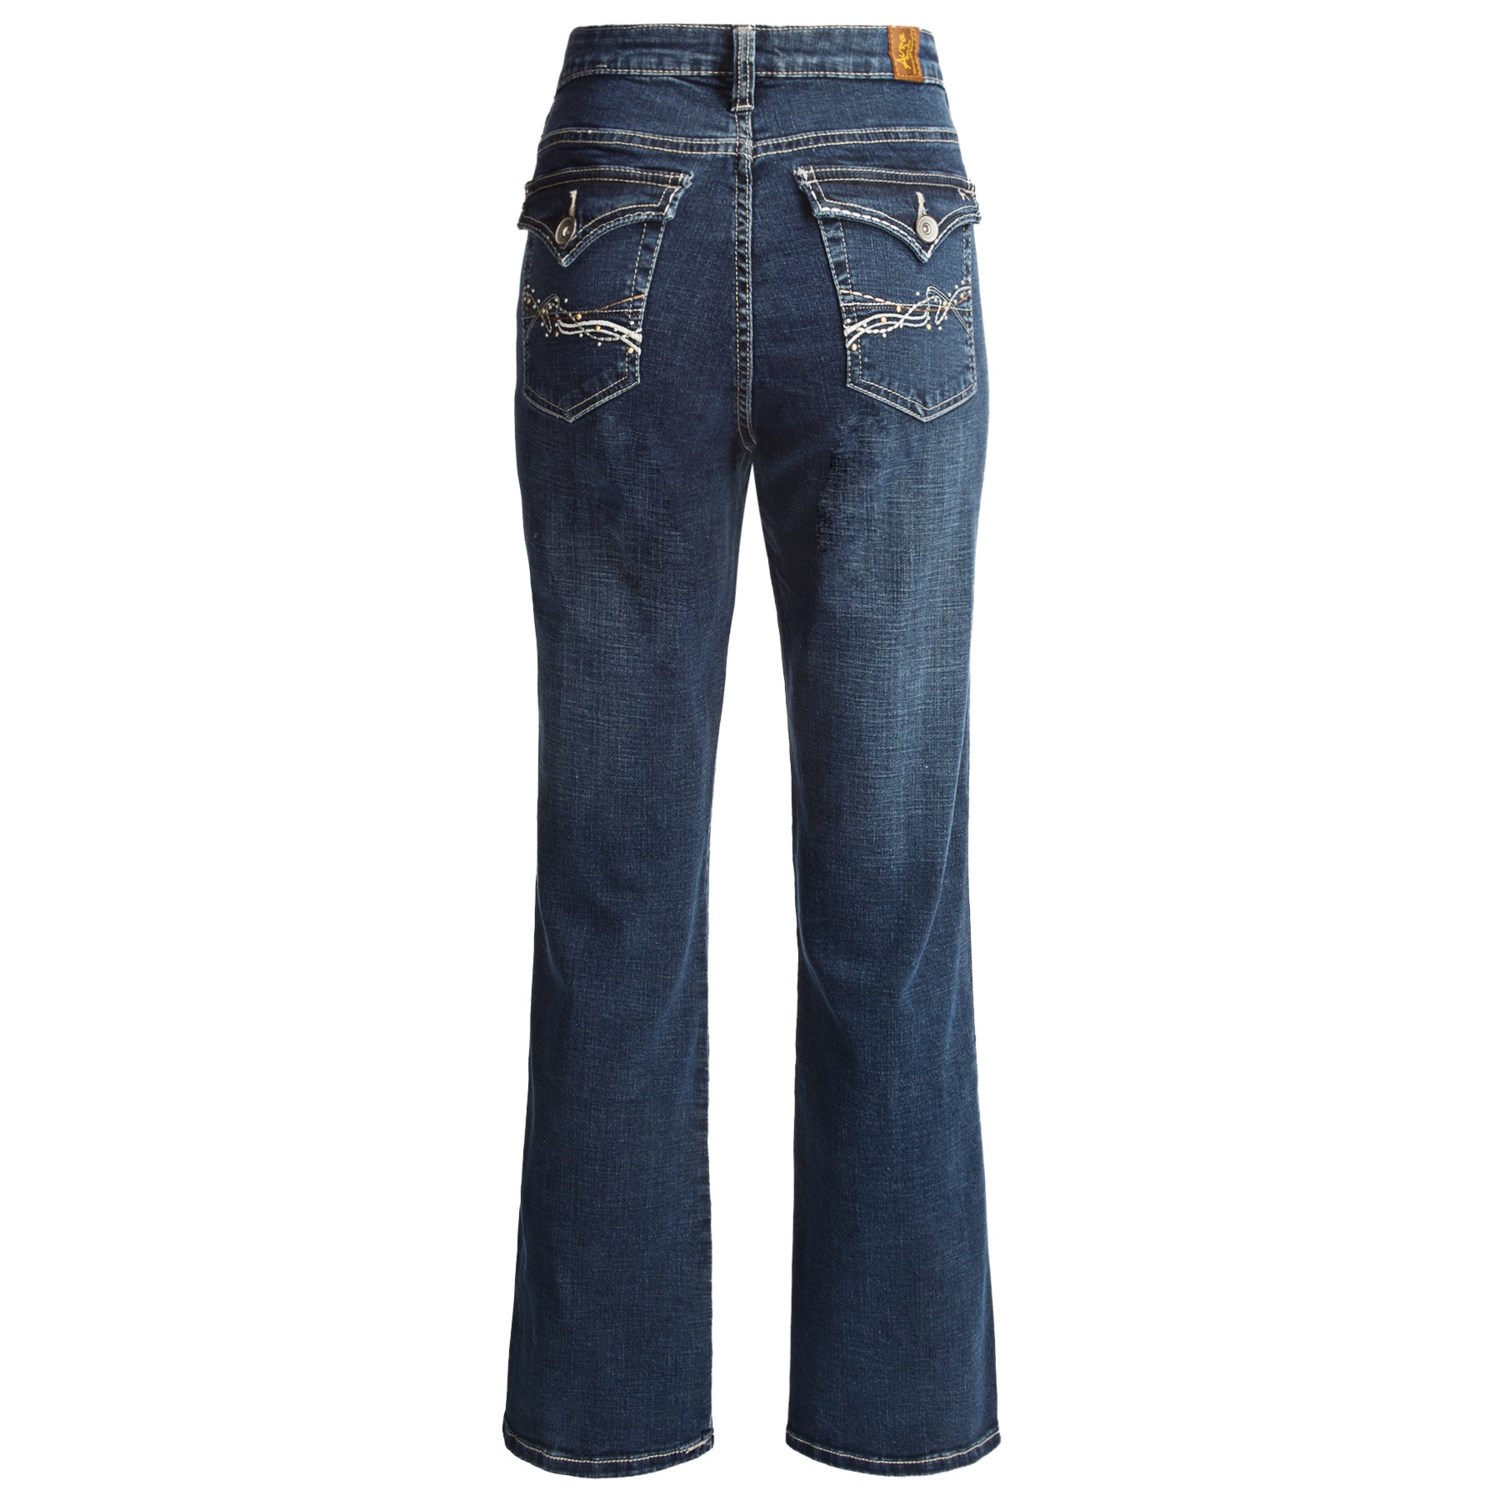 Wrangler Aura Instantly Slimming Jeans (For Women) - Save 50%